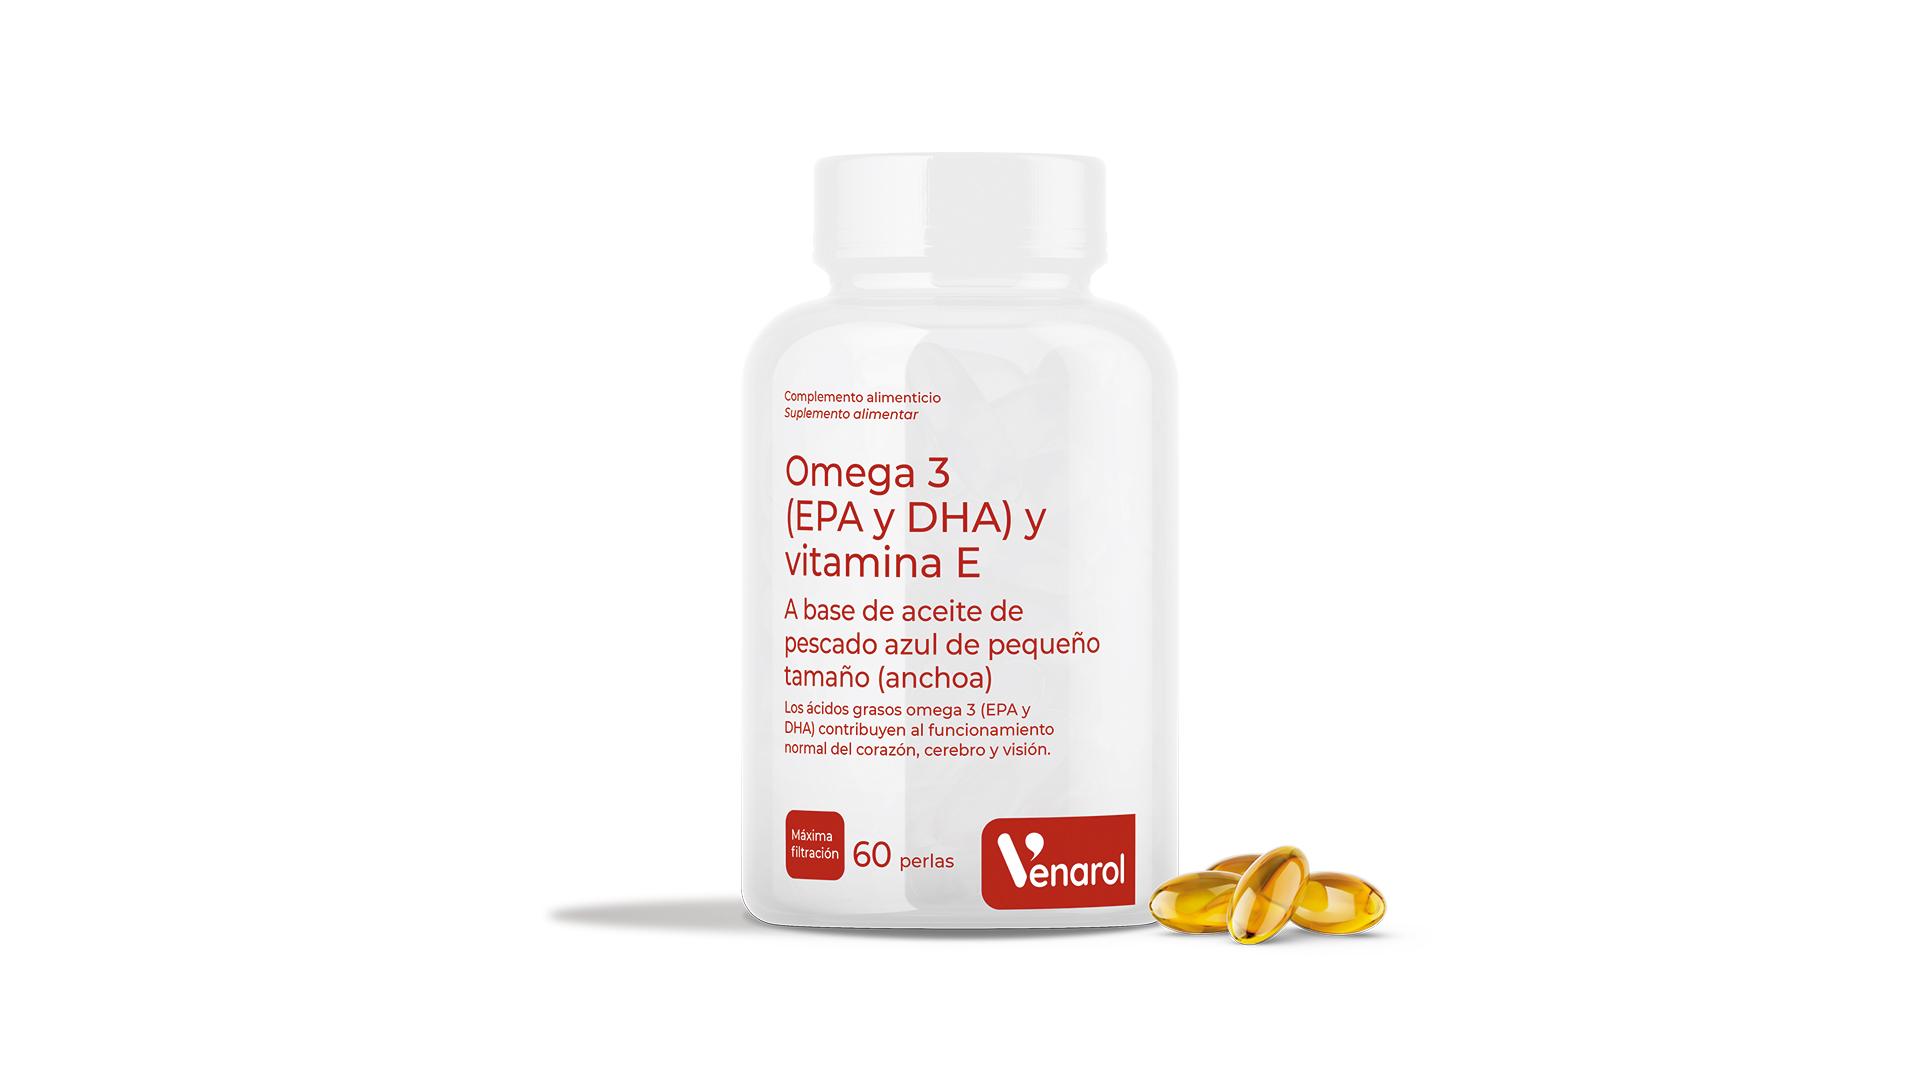 Omega 3 (EPA y DHA) y vitamina E